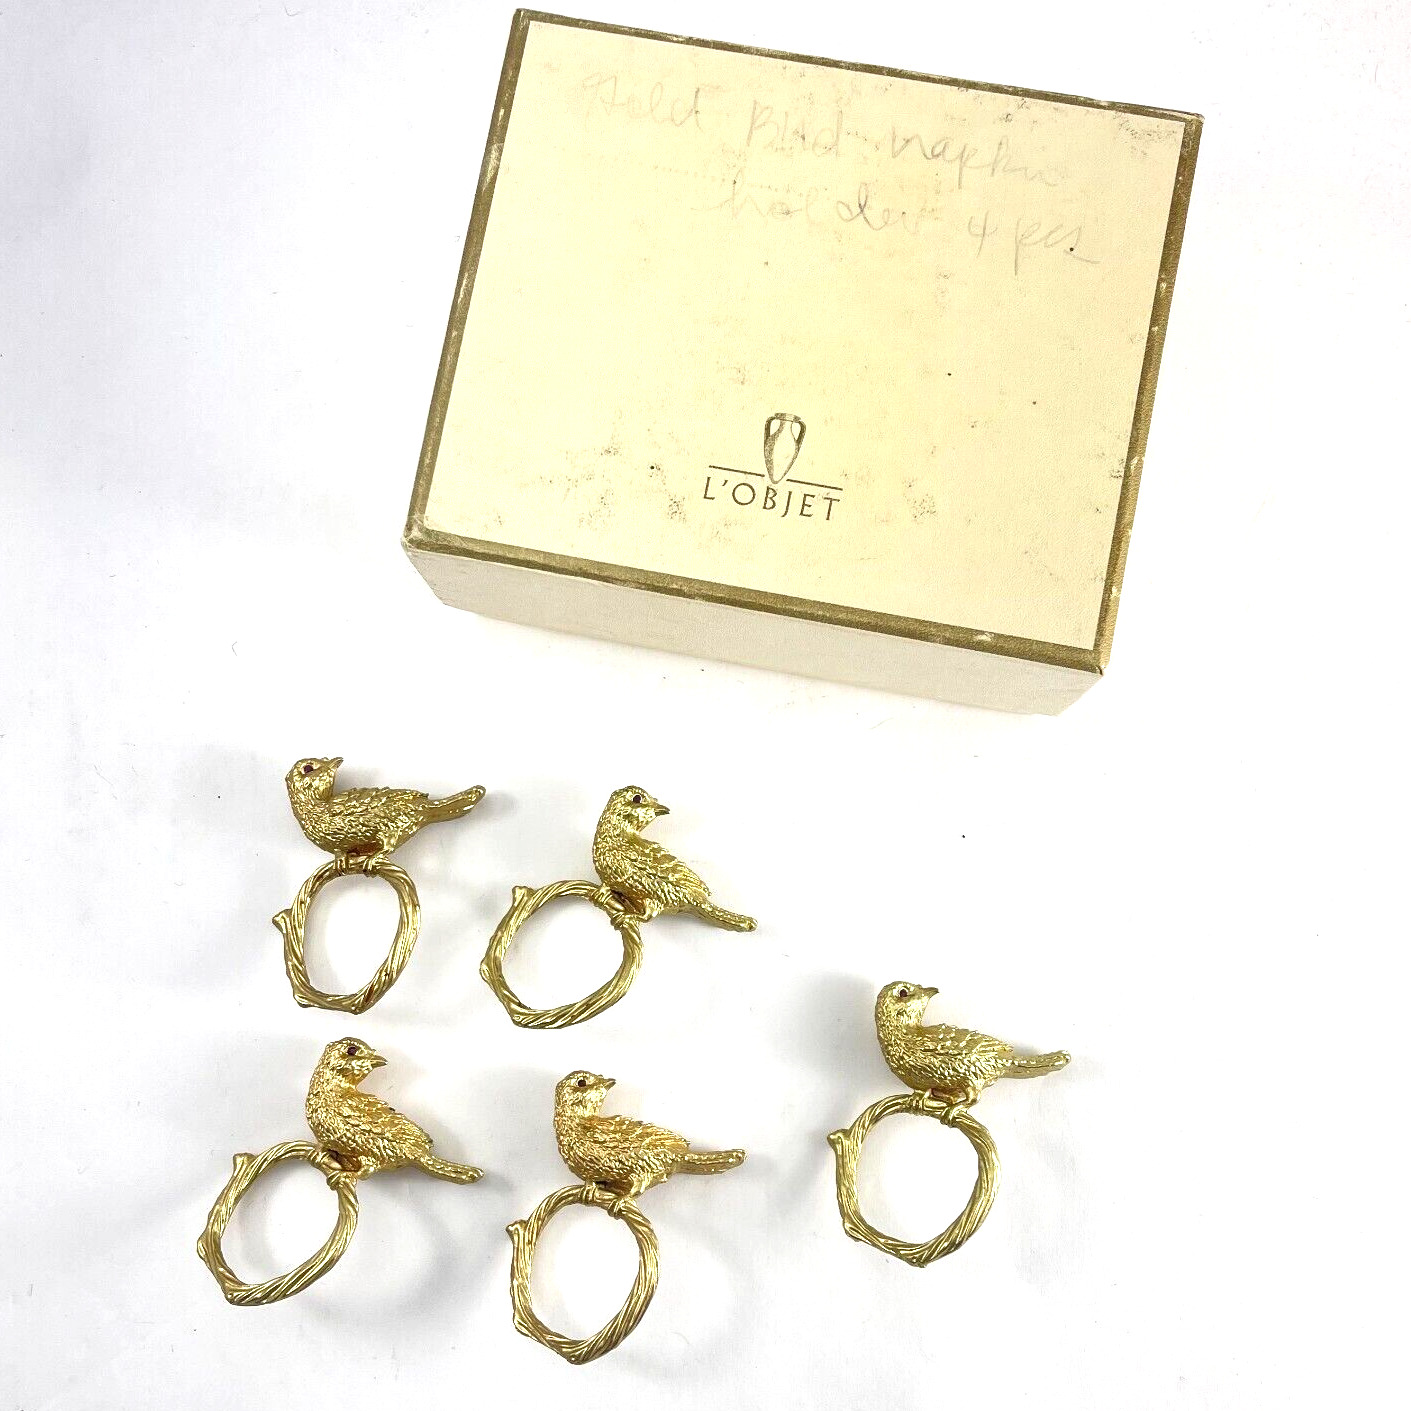 L'Objet Bird Jewels Napkin Rings with Swarovski Crystals - Set of 5